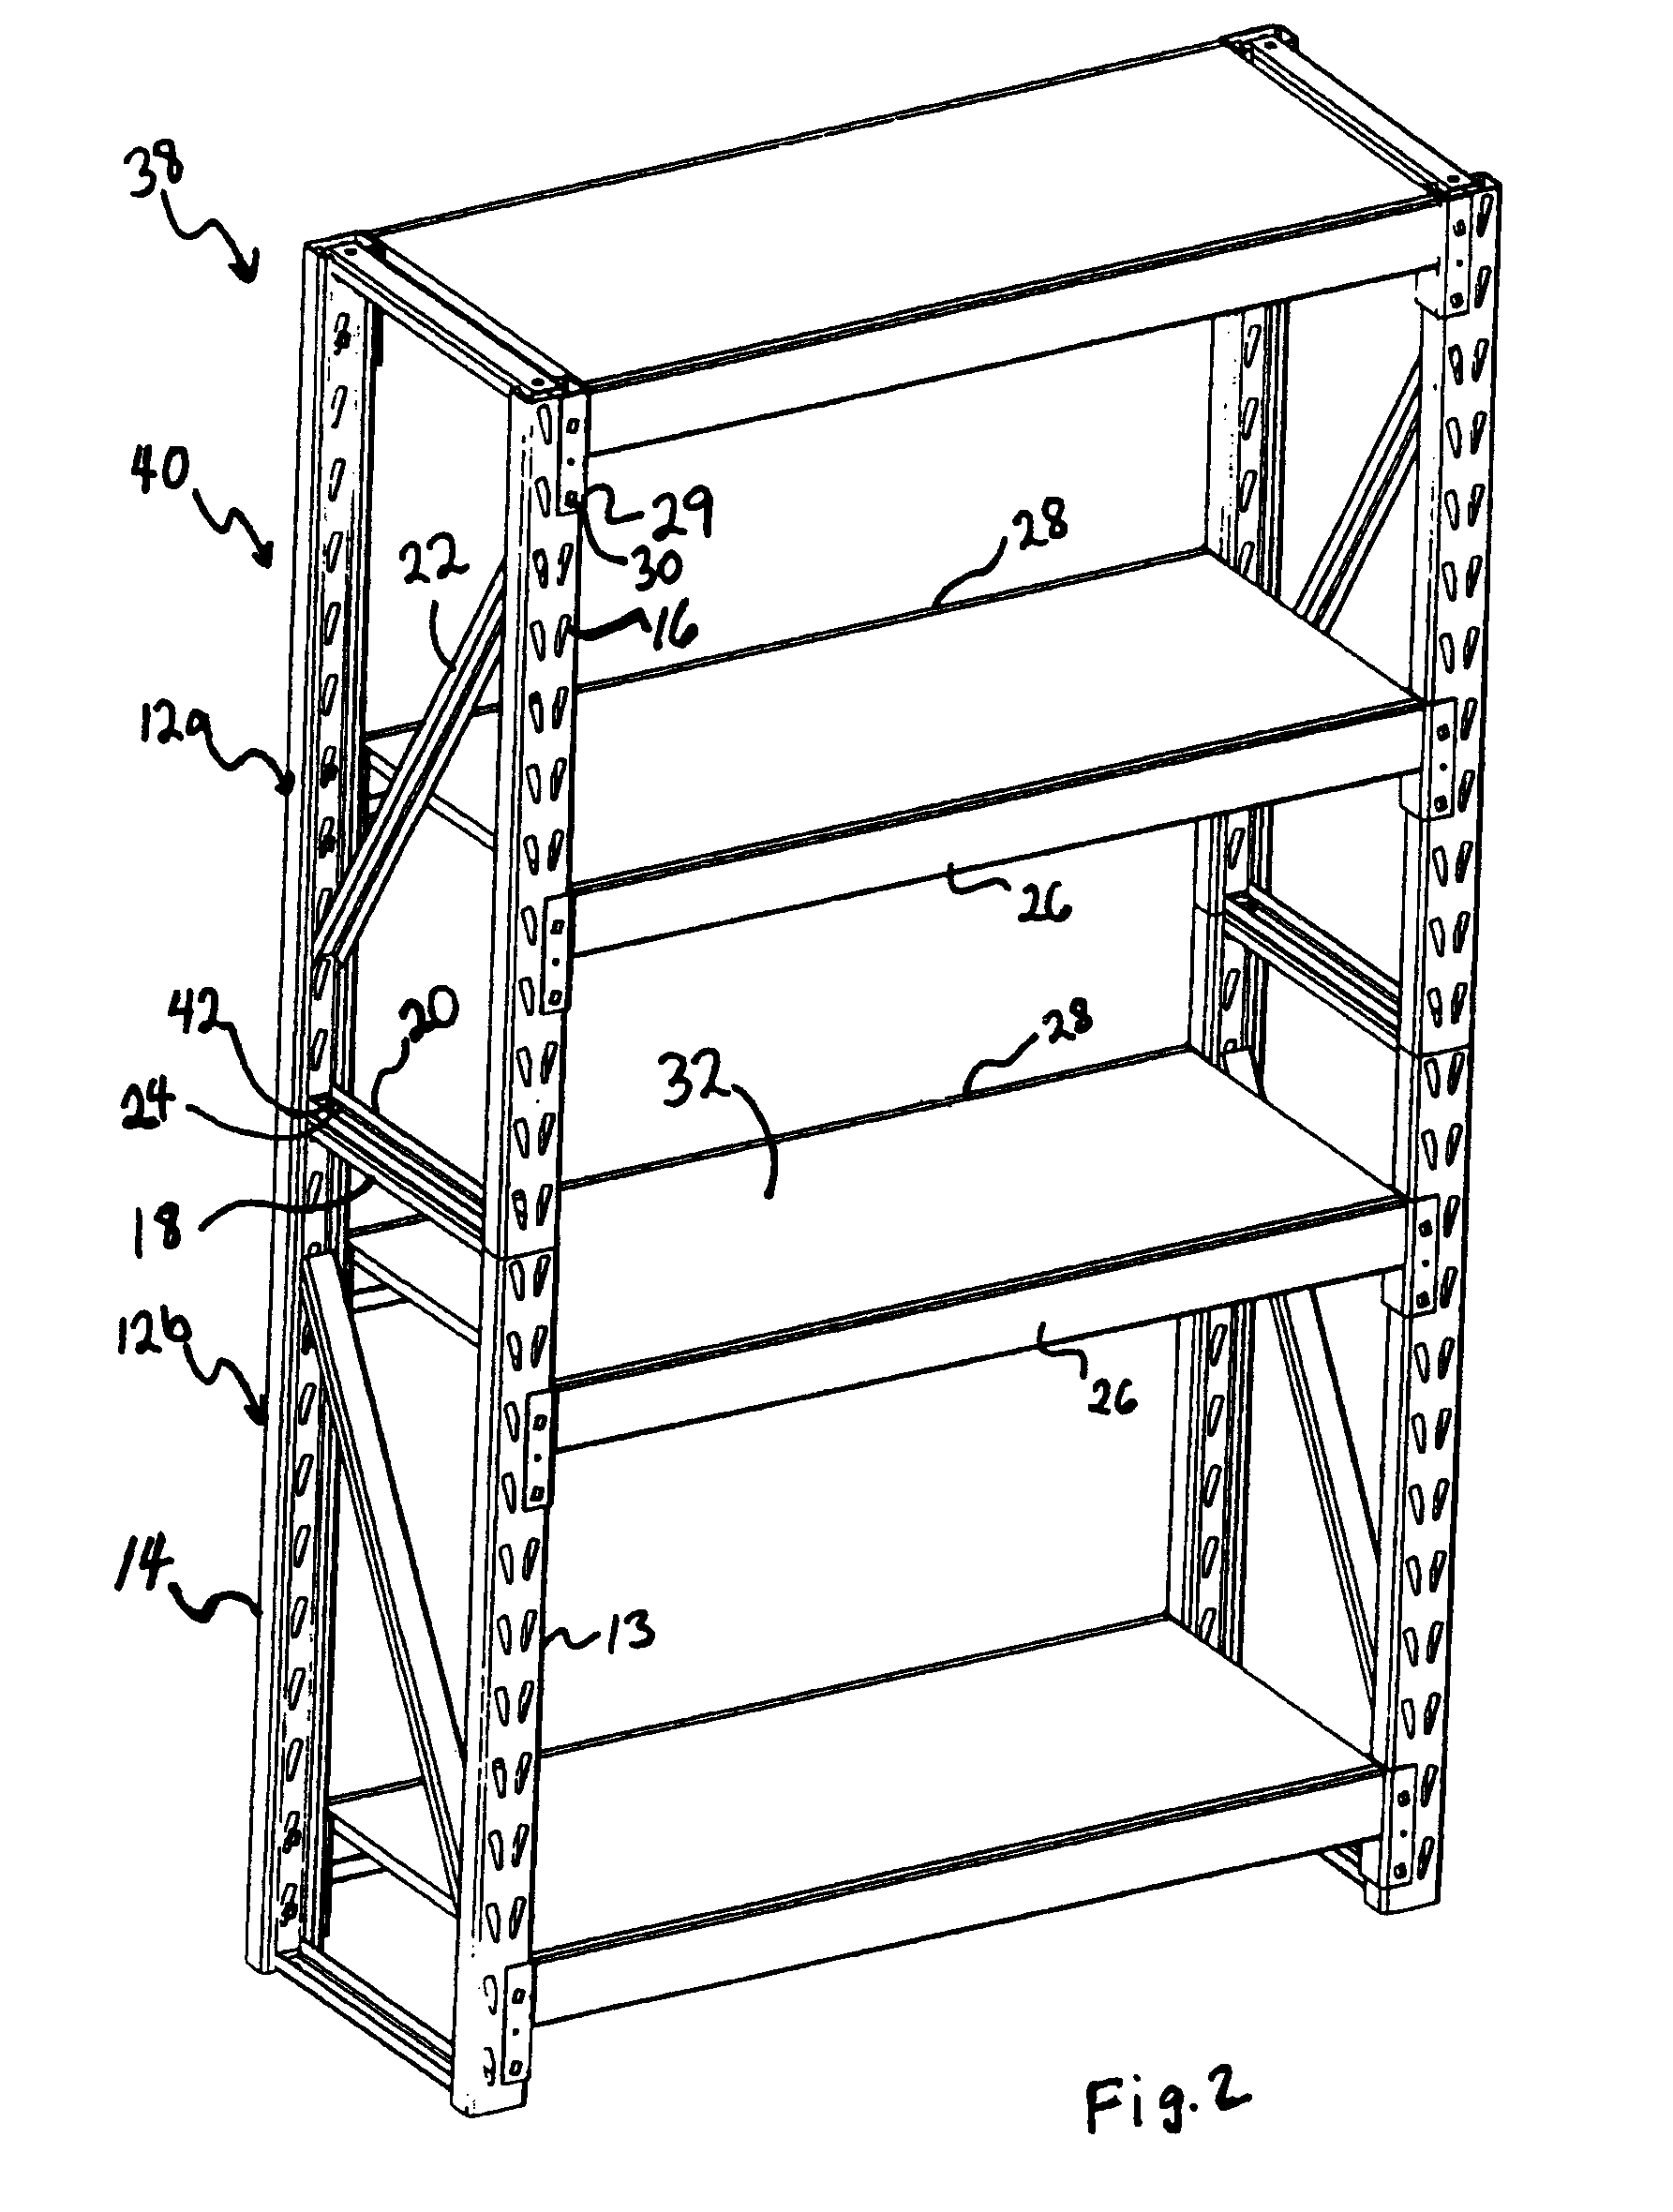 Modular rack assembly